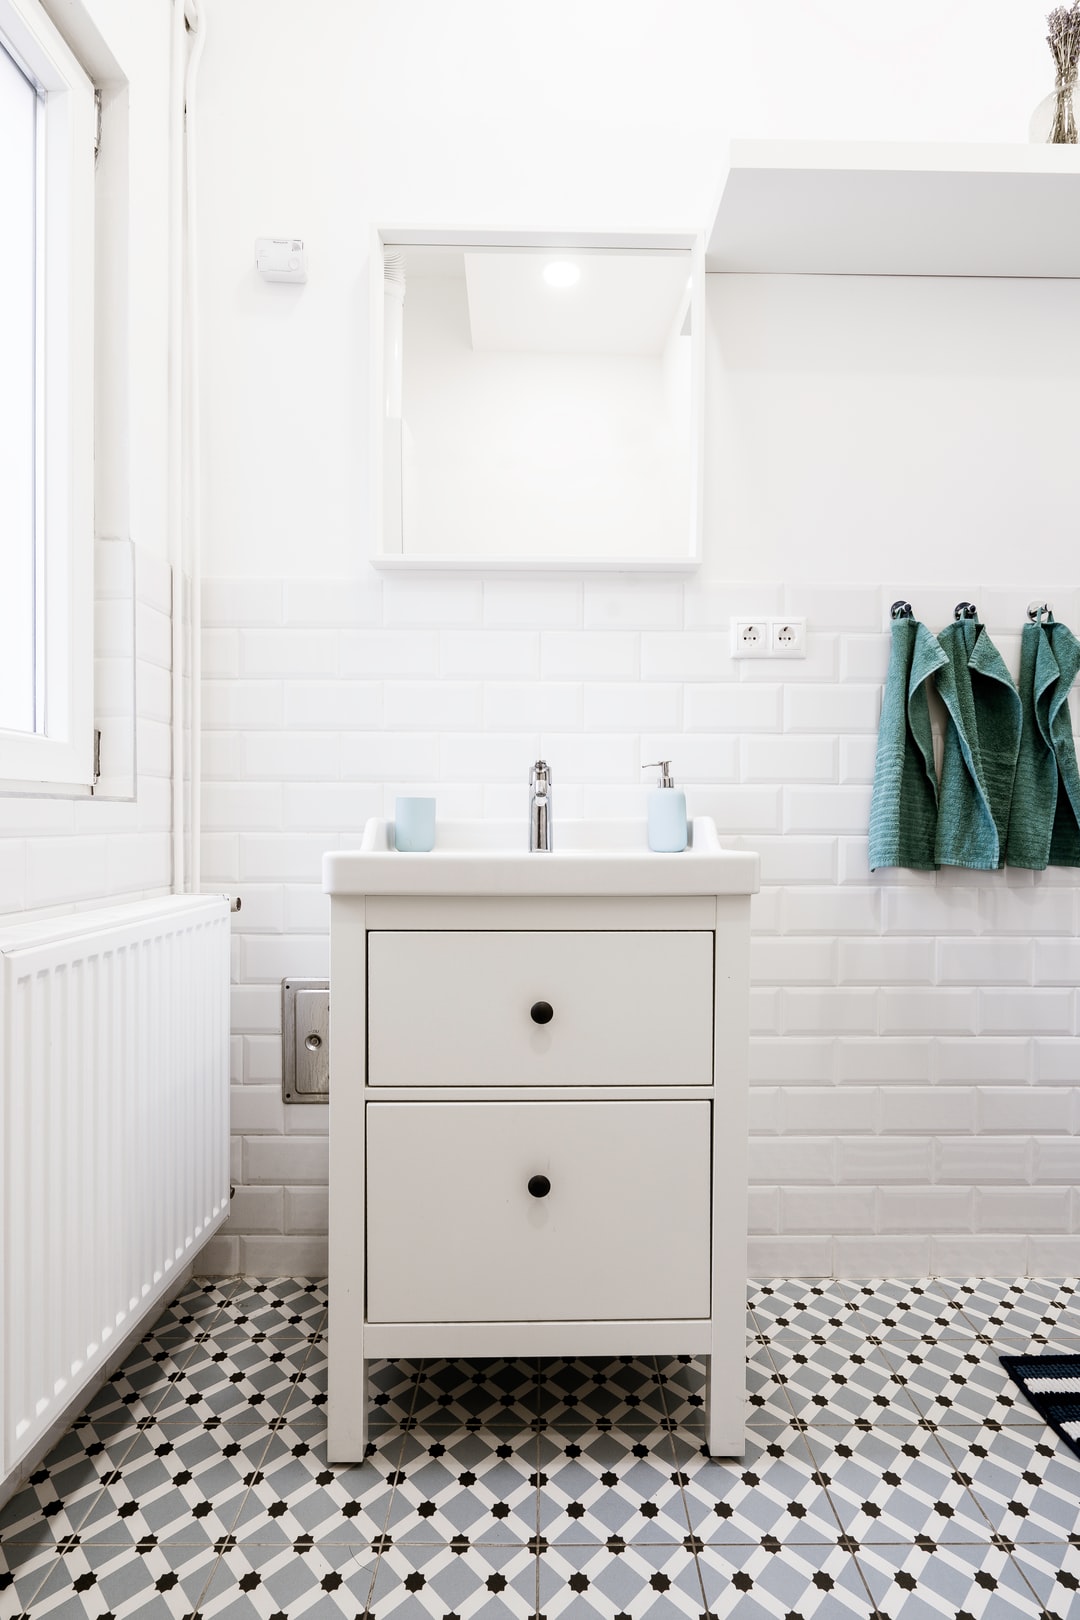 A white tiled bathroom setting